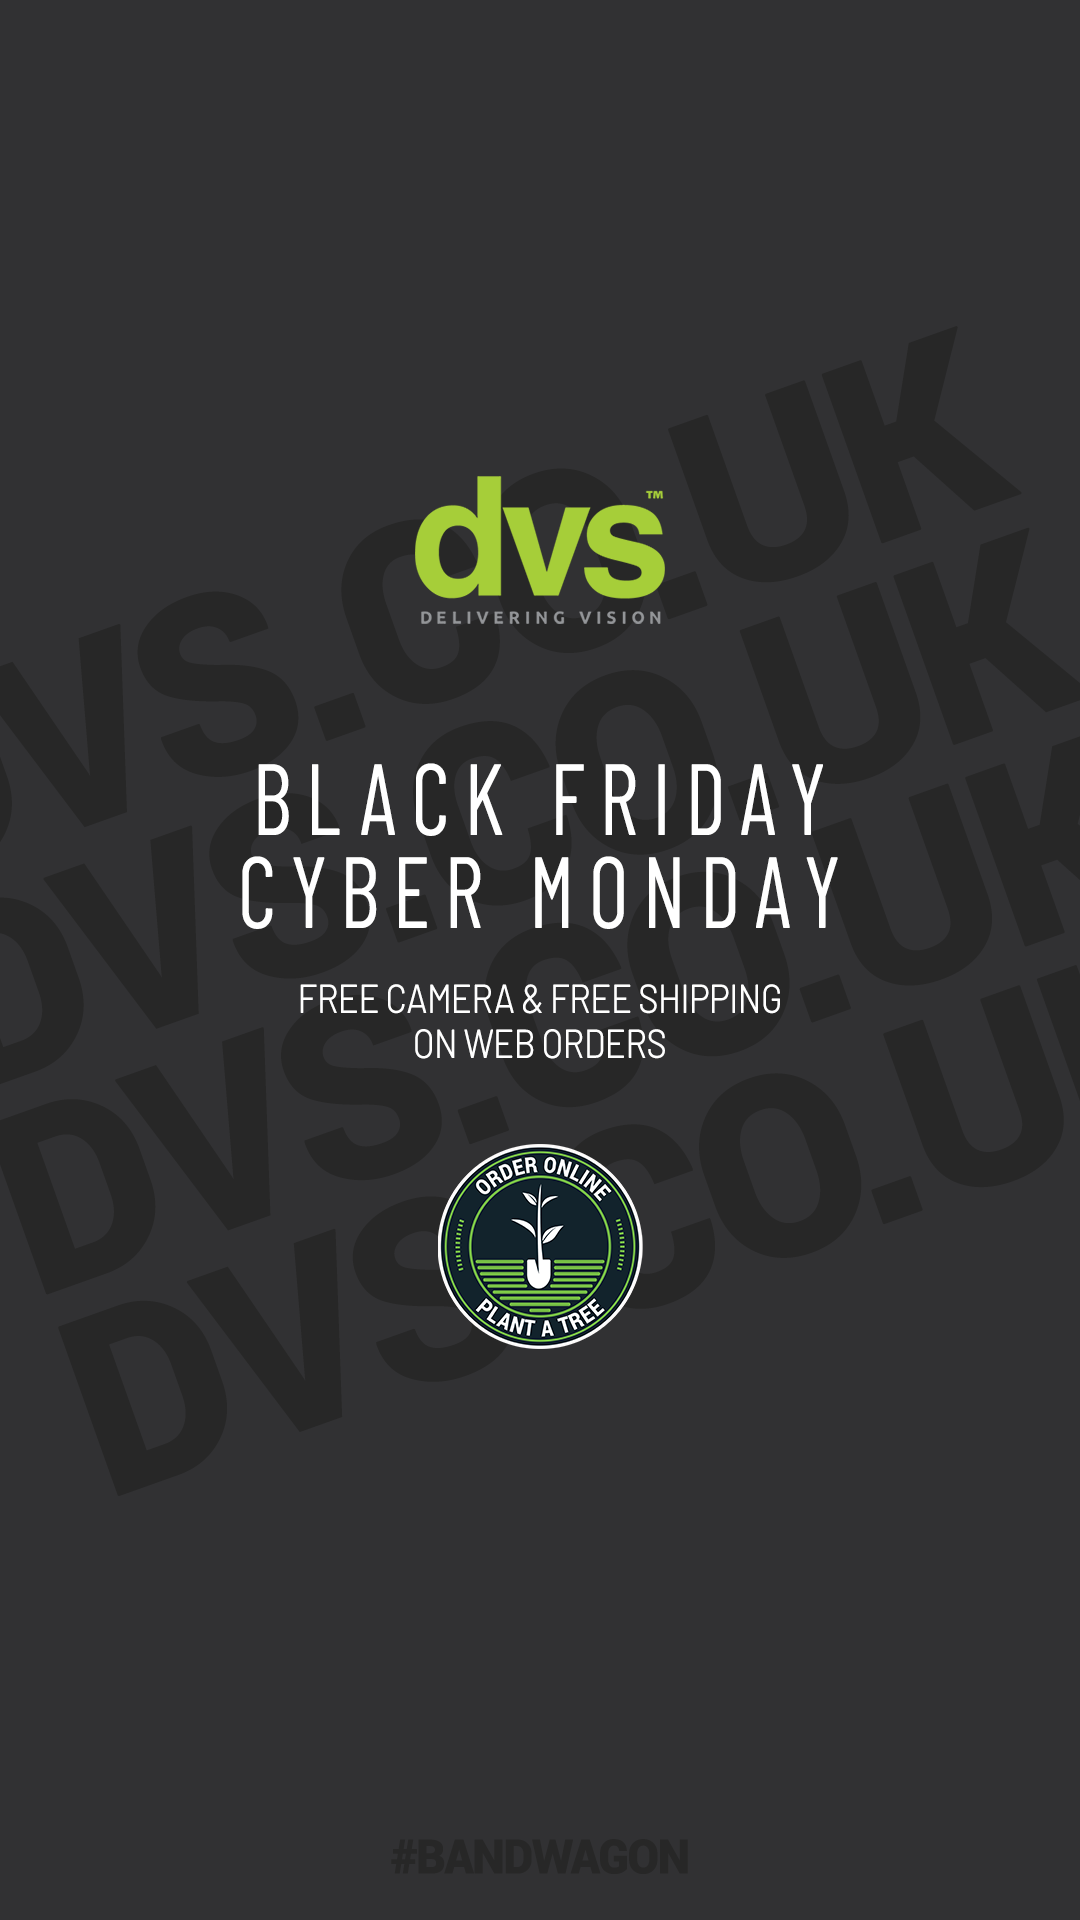 Black Friday - Cyber Monday at DVS